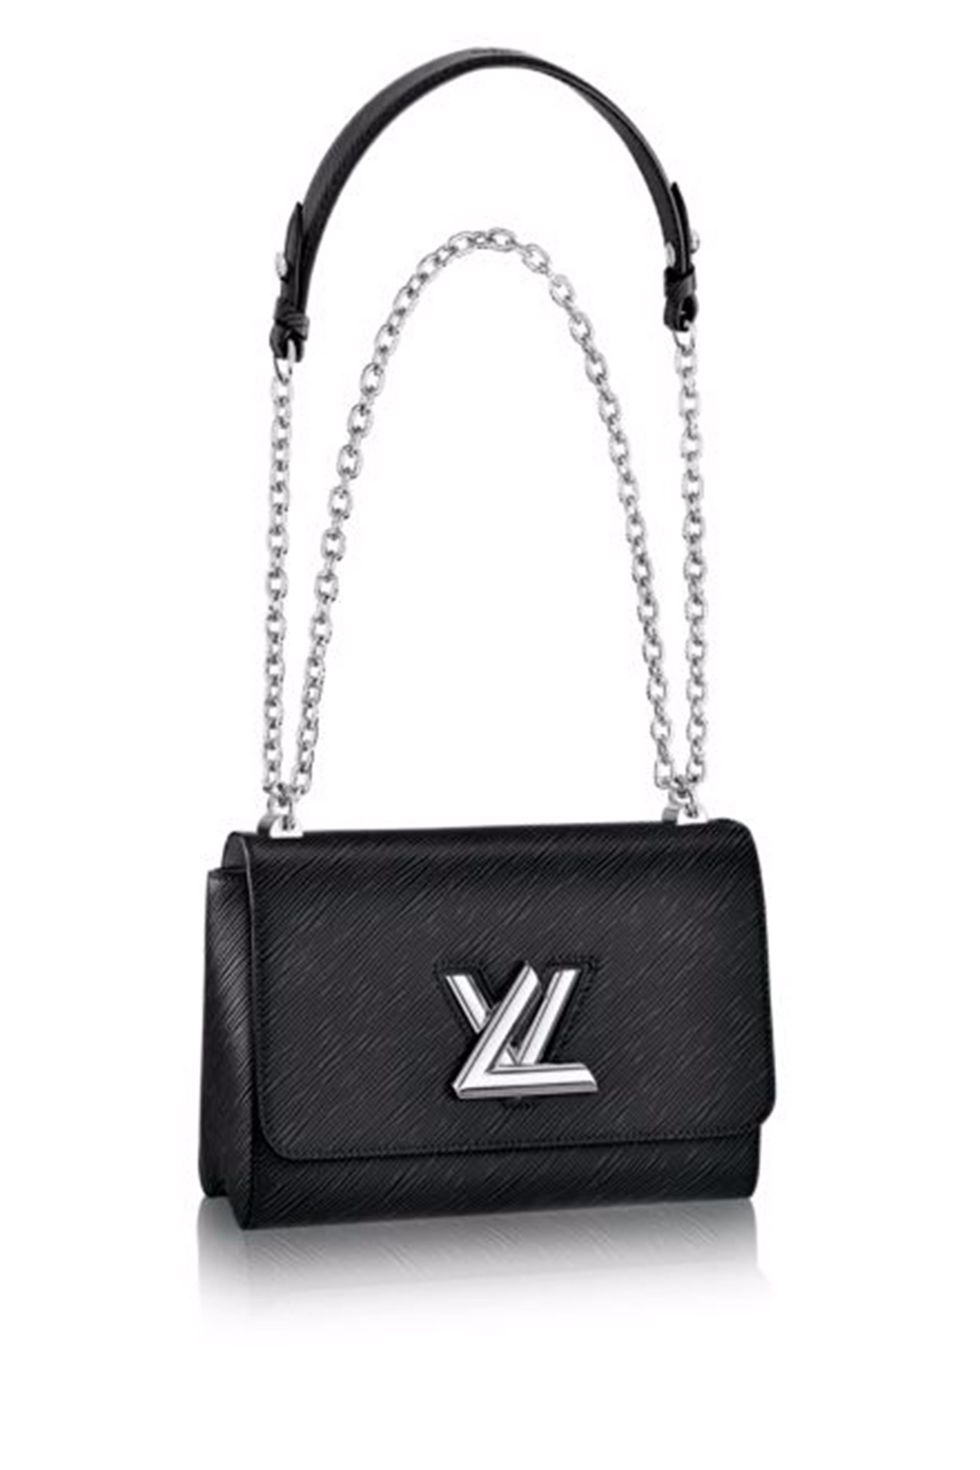 Louis Vuitton twist bag